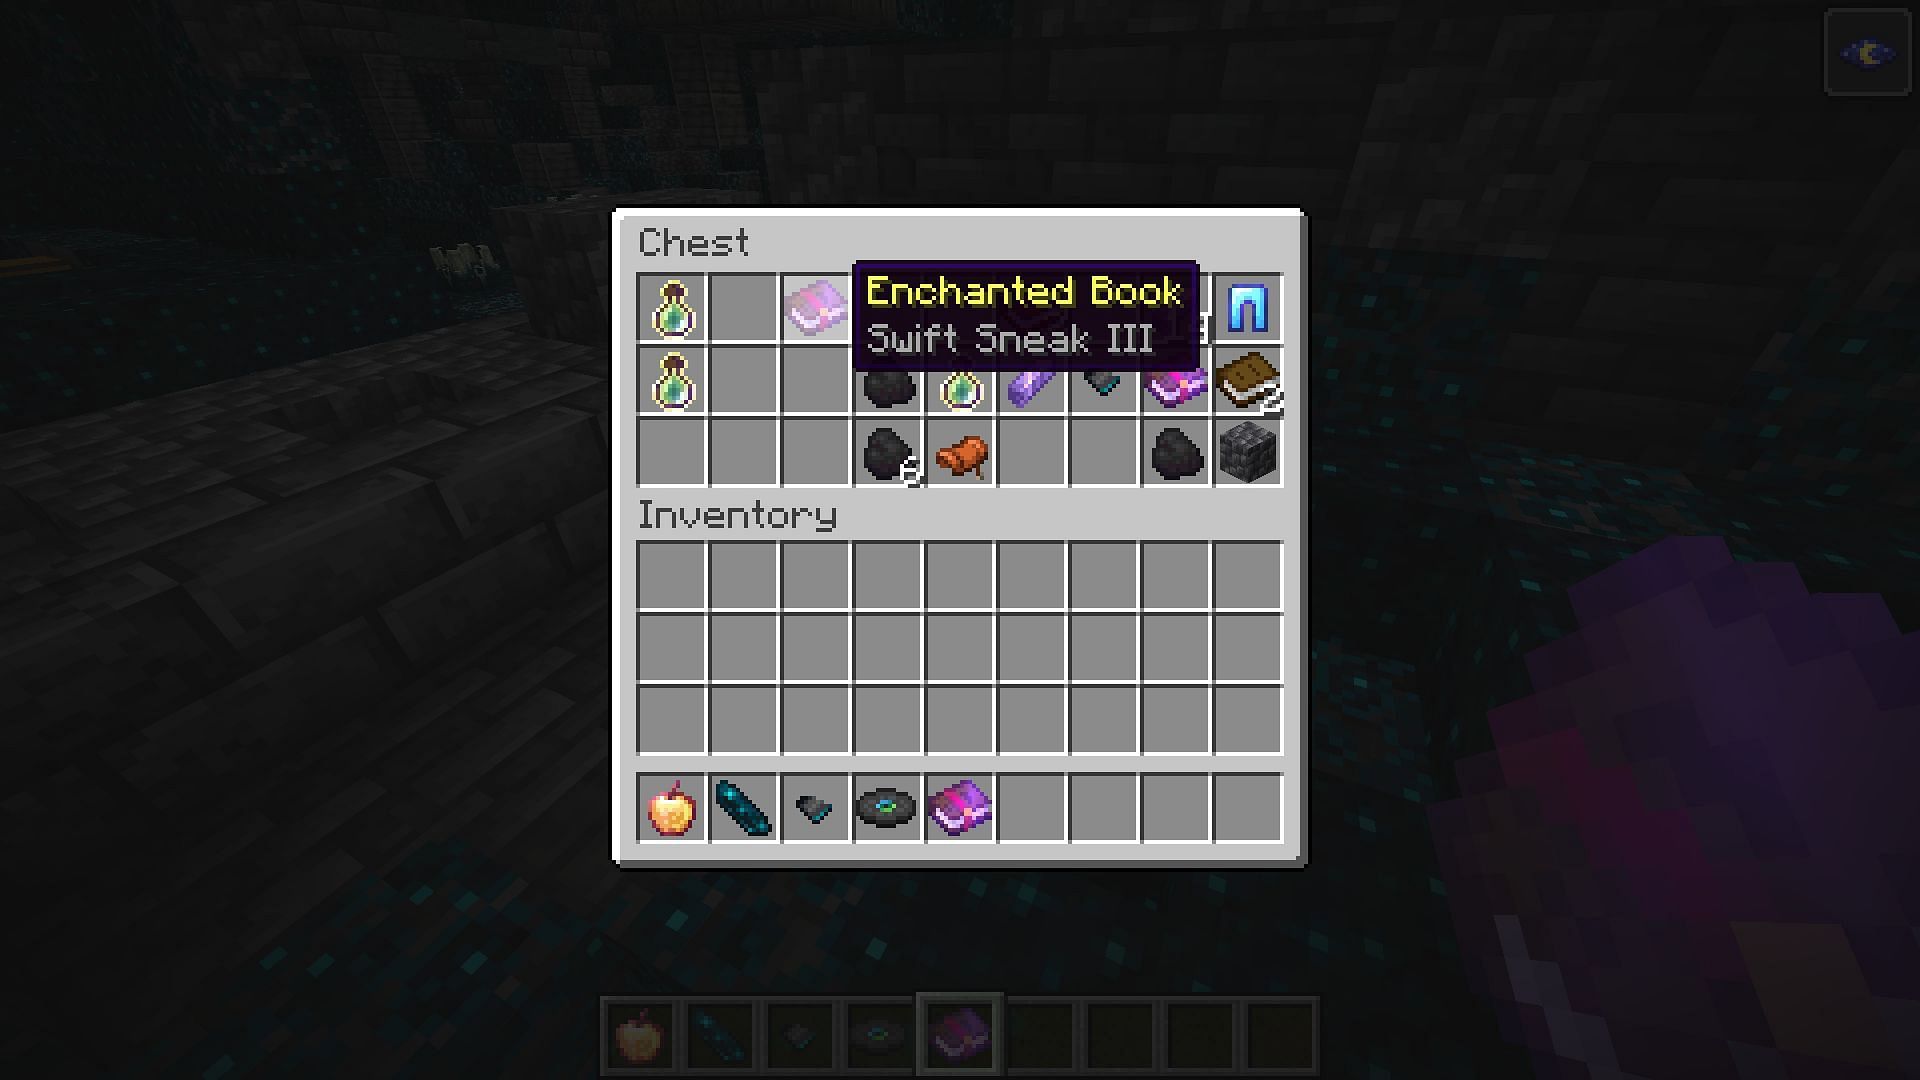 A Swift Sneak 3 enchanted book (Image via Minecraft)